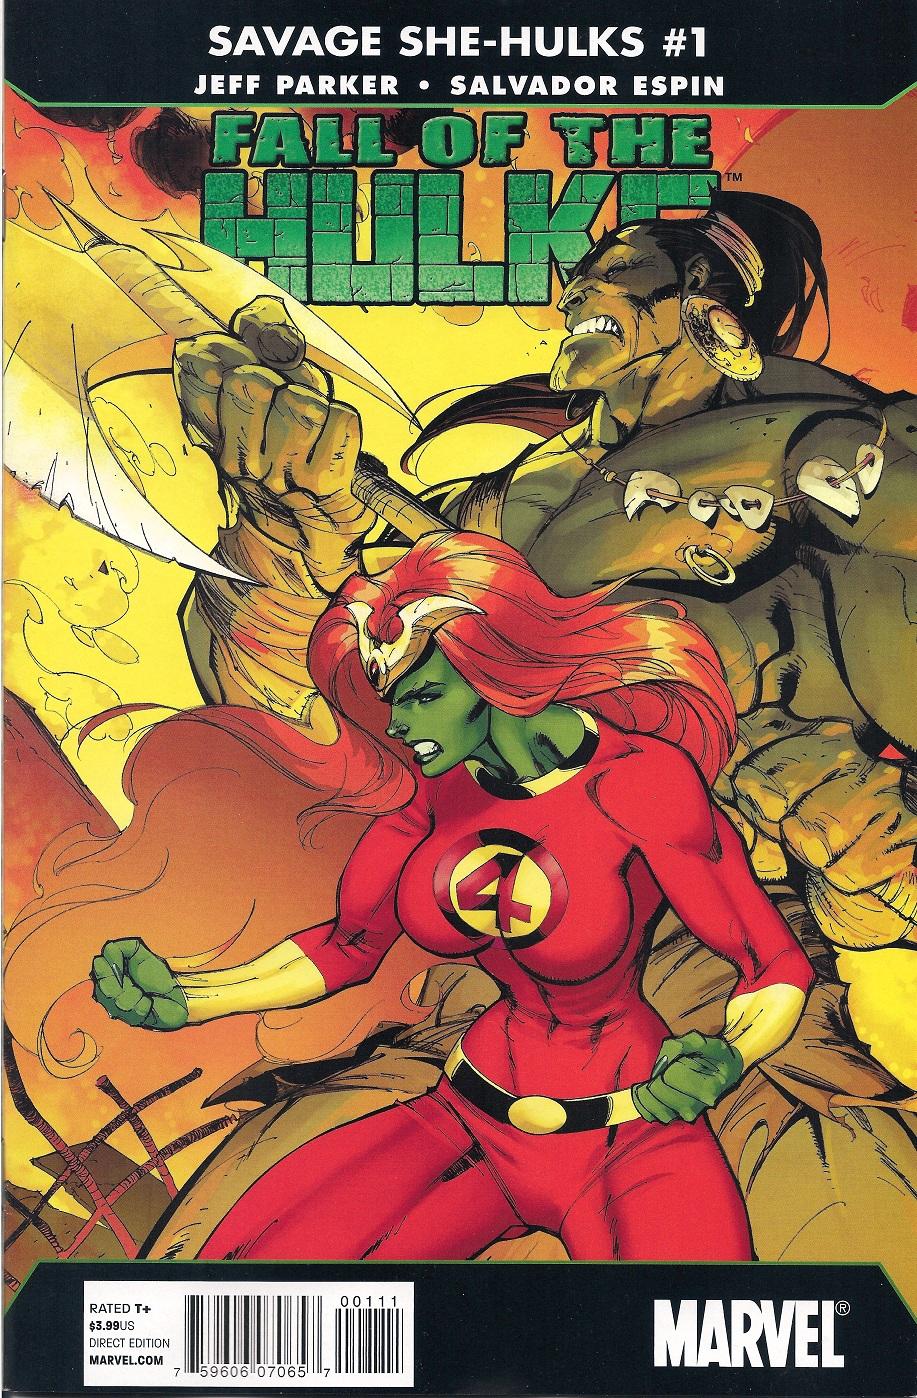 Fall of the Hulks: The Savage She-Hulks Vol. 1 #1